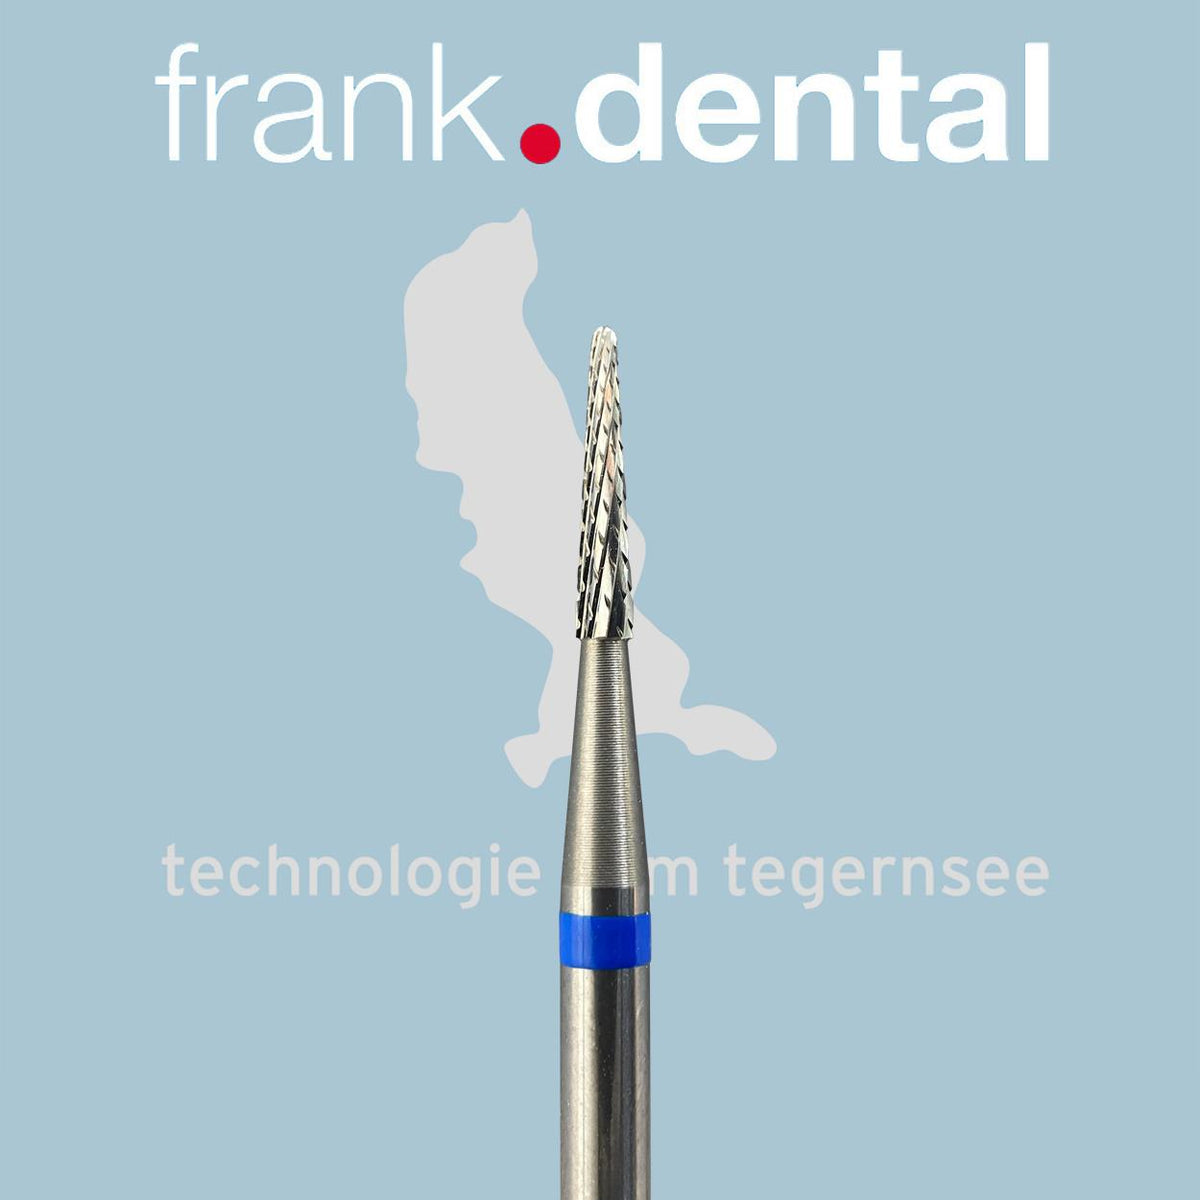 DentrealStore - Frank Dental Tungsten Carpide Monster Hard Burs - 138K